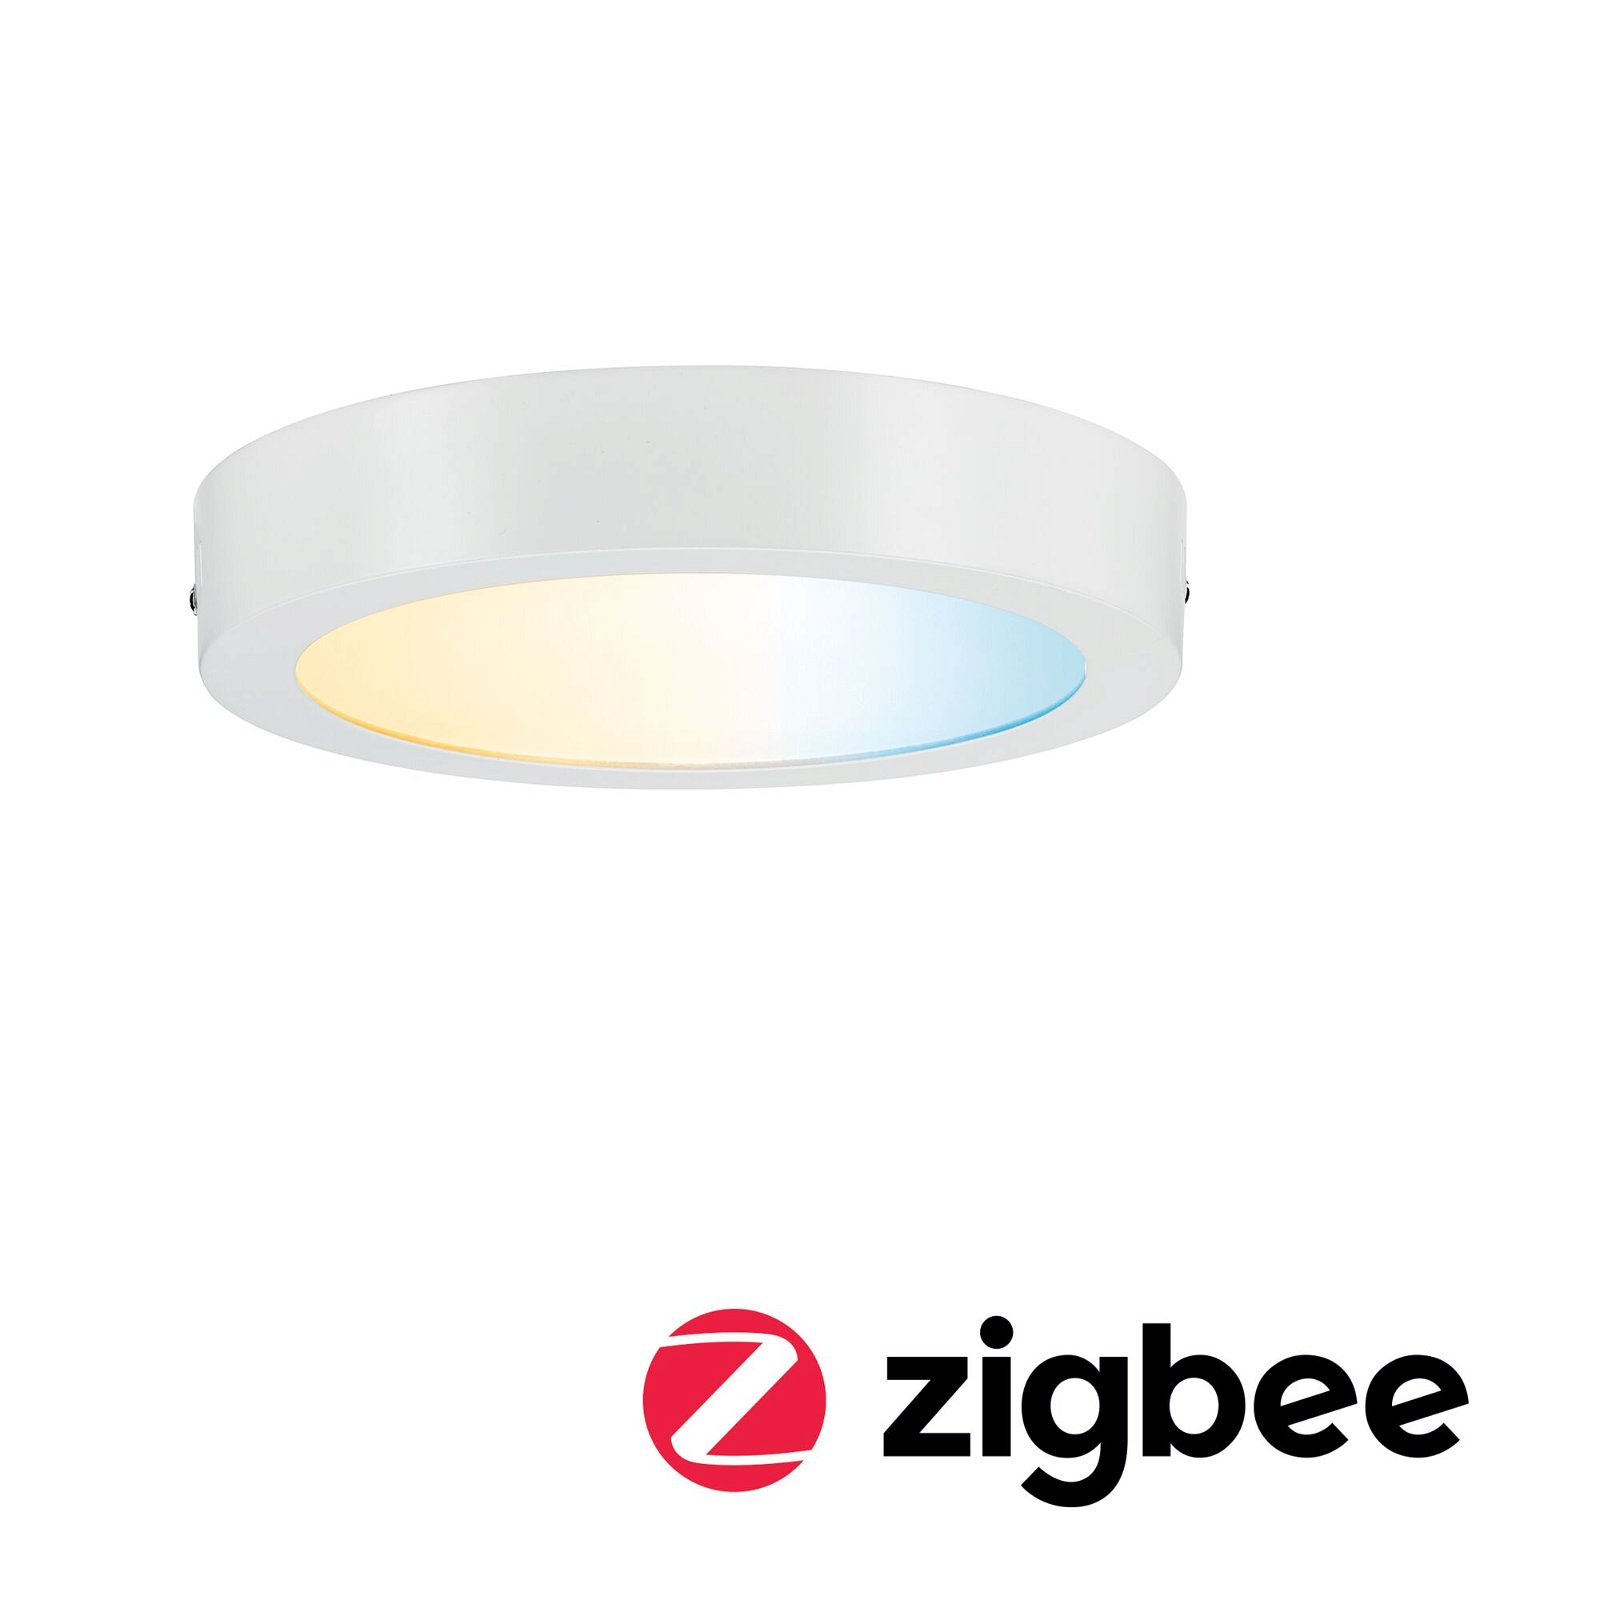 LED Panel Smart Home Zigbee Cesena rund 225mm Tunable White Weiß matt dimmbar